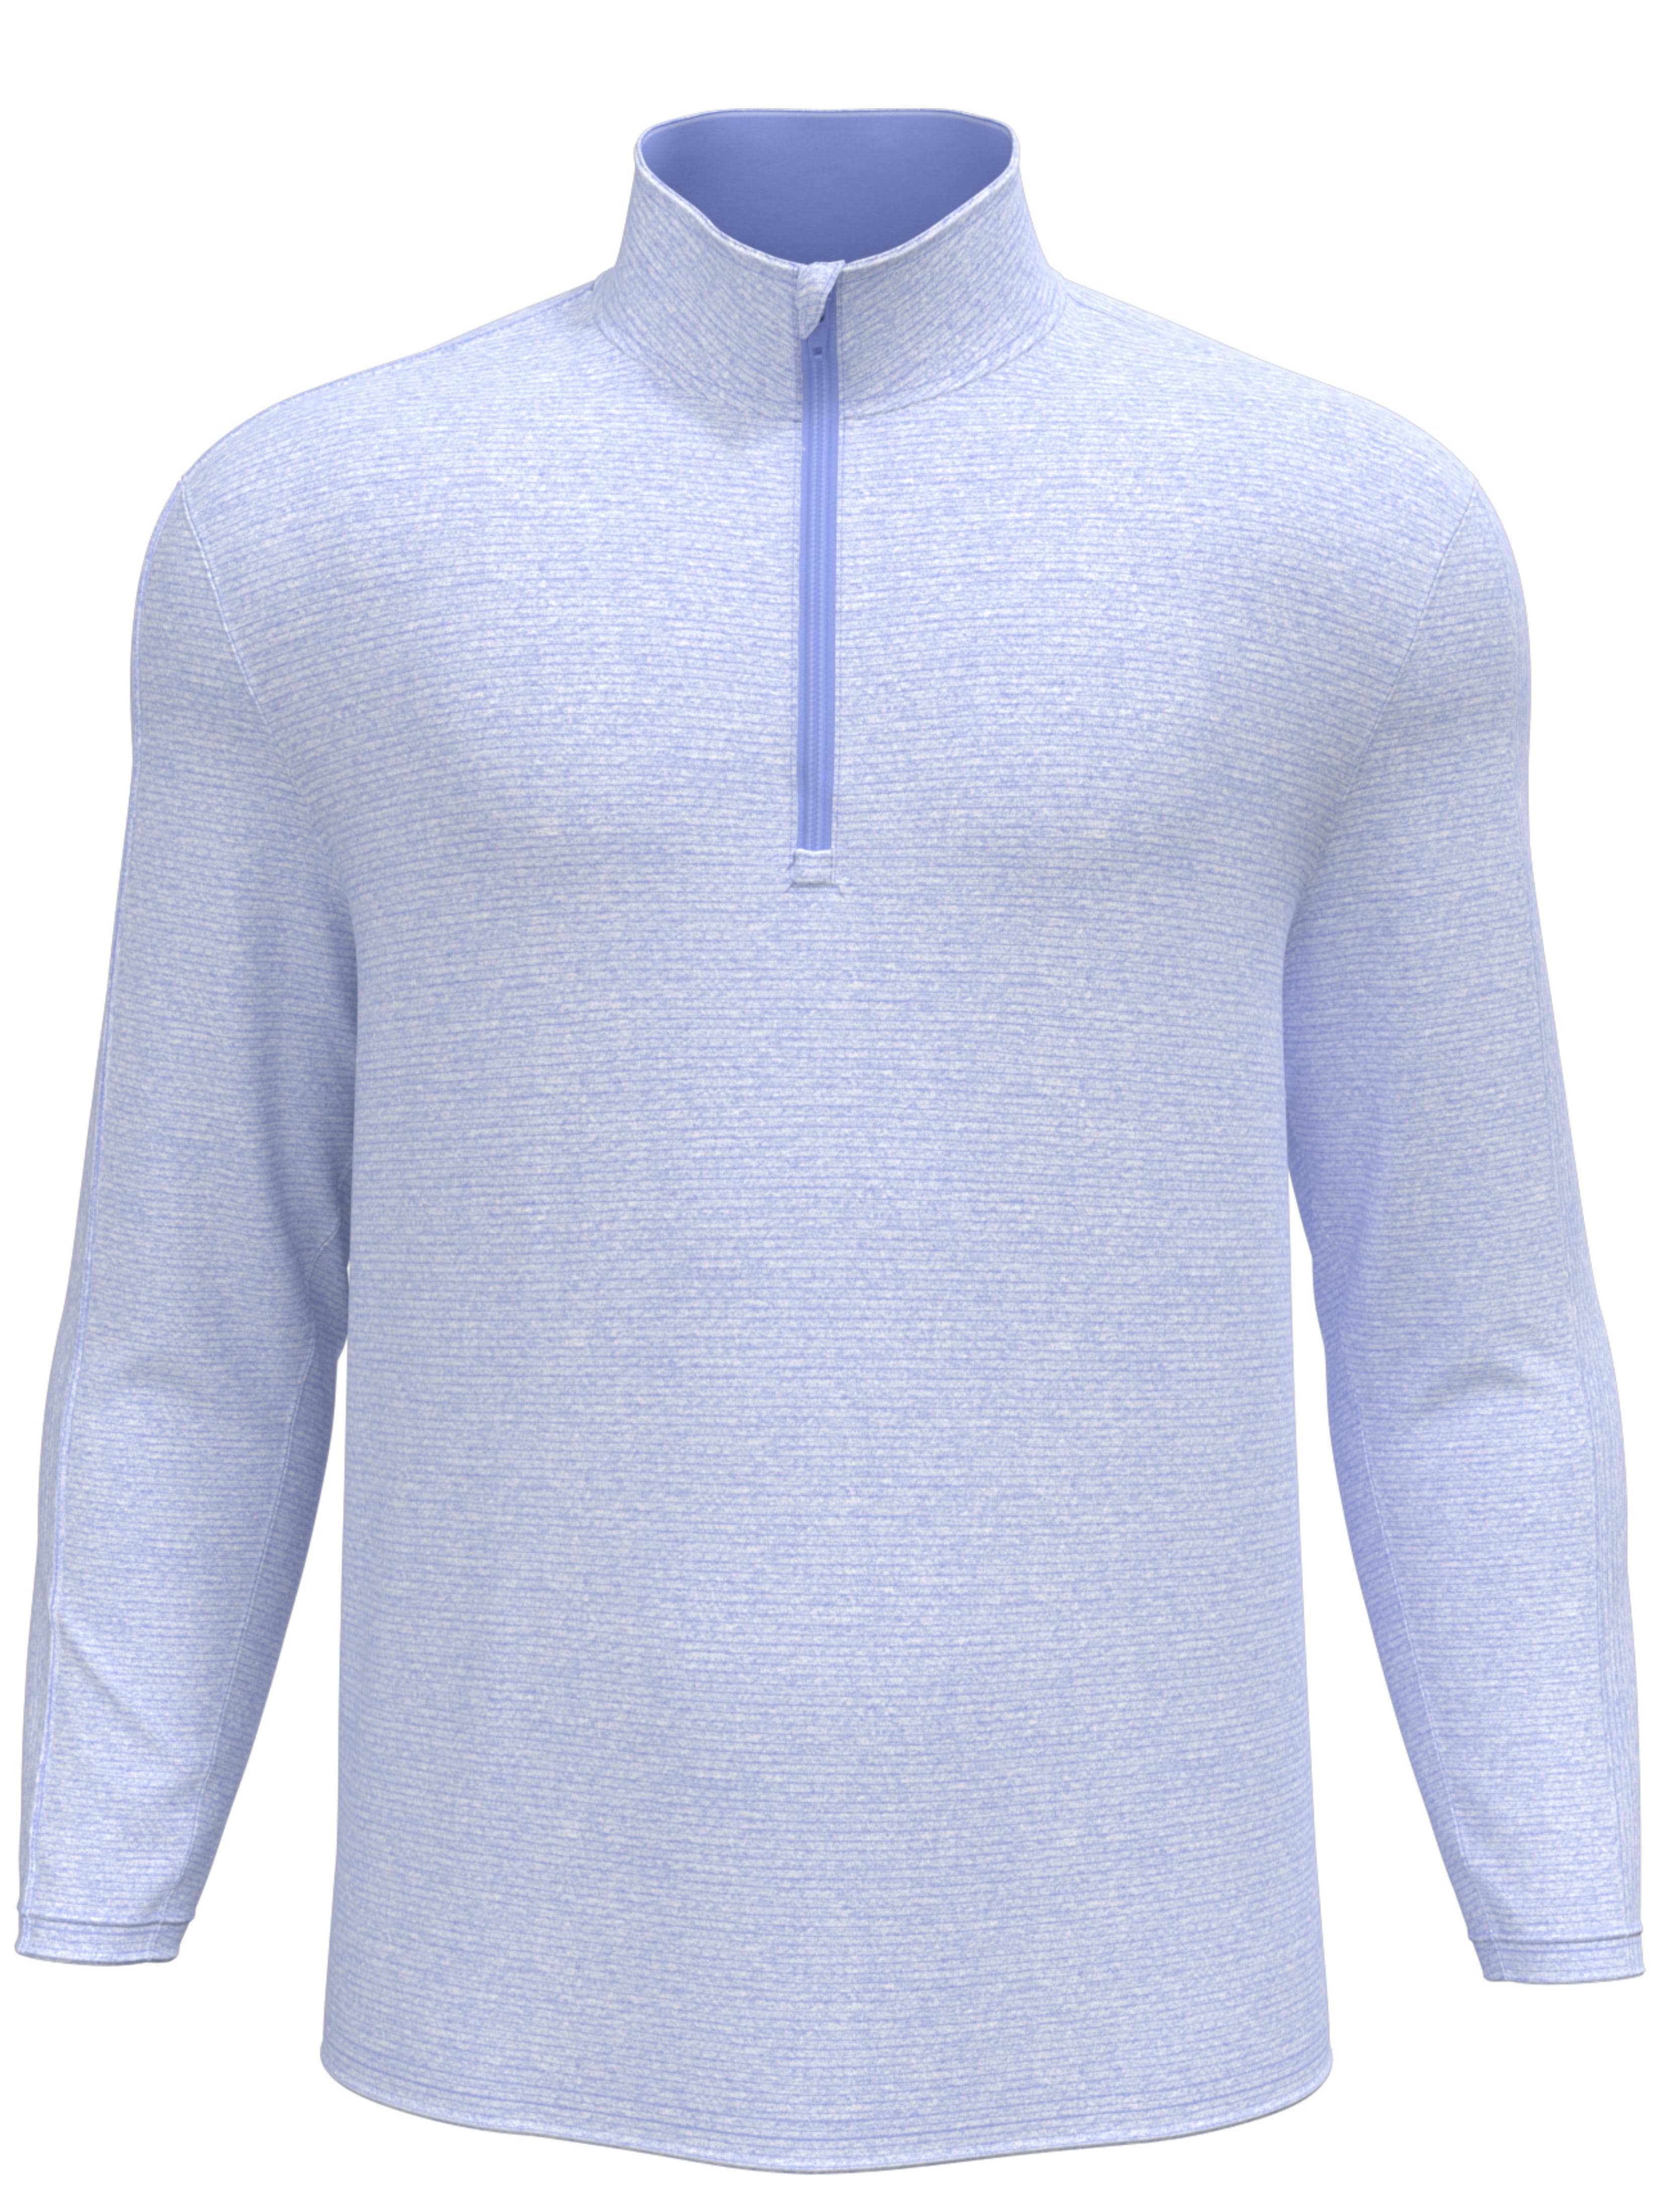 Jack Nicklaus Mens 1/4 Zip Sun Shade Base Layer Golf Shirt, Size Medium, Light Coastline Bl Heather Blue, Polyester/Elastane | Golf Apparel Shop